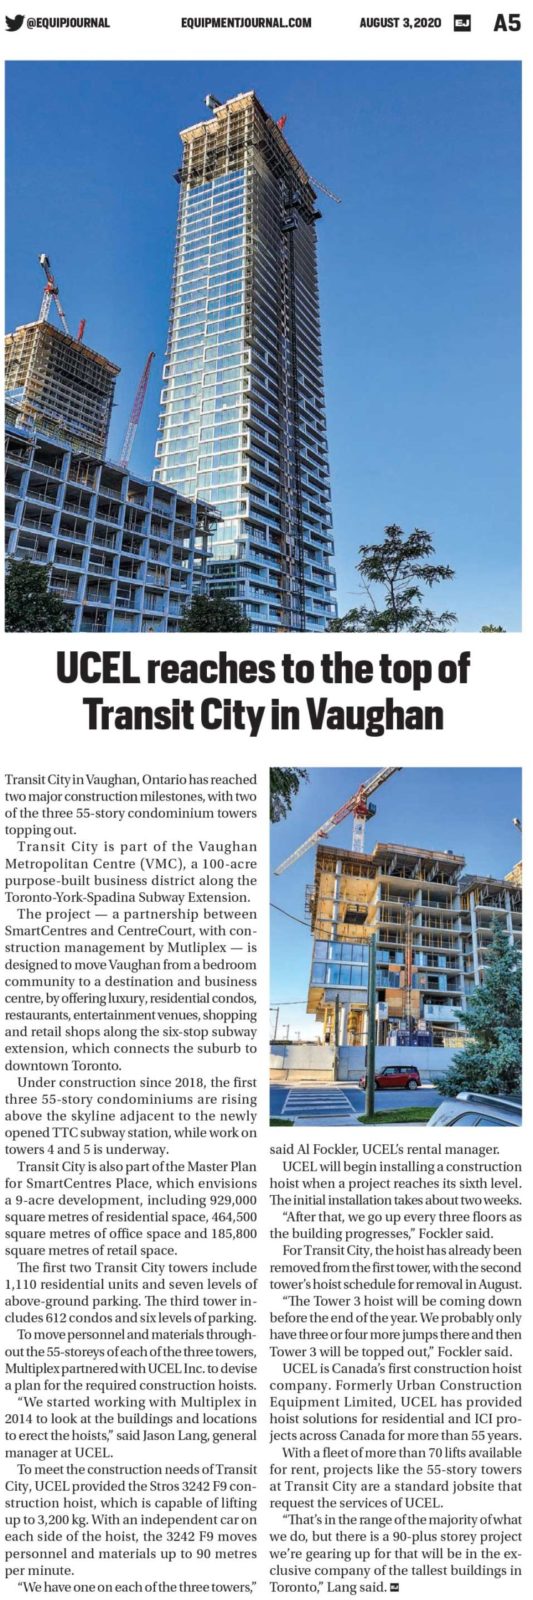 UCEL-Transit-City-Vaughan-EquipmentJournal.com-STORY-AUG-3-2020-ISSUE